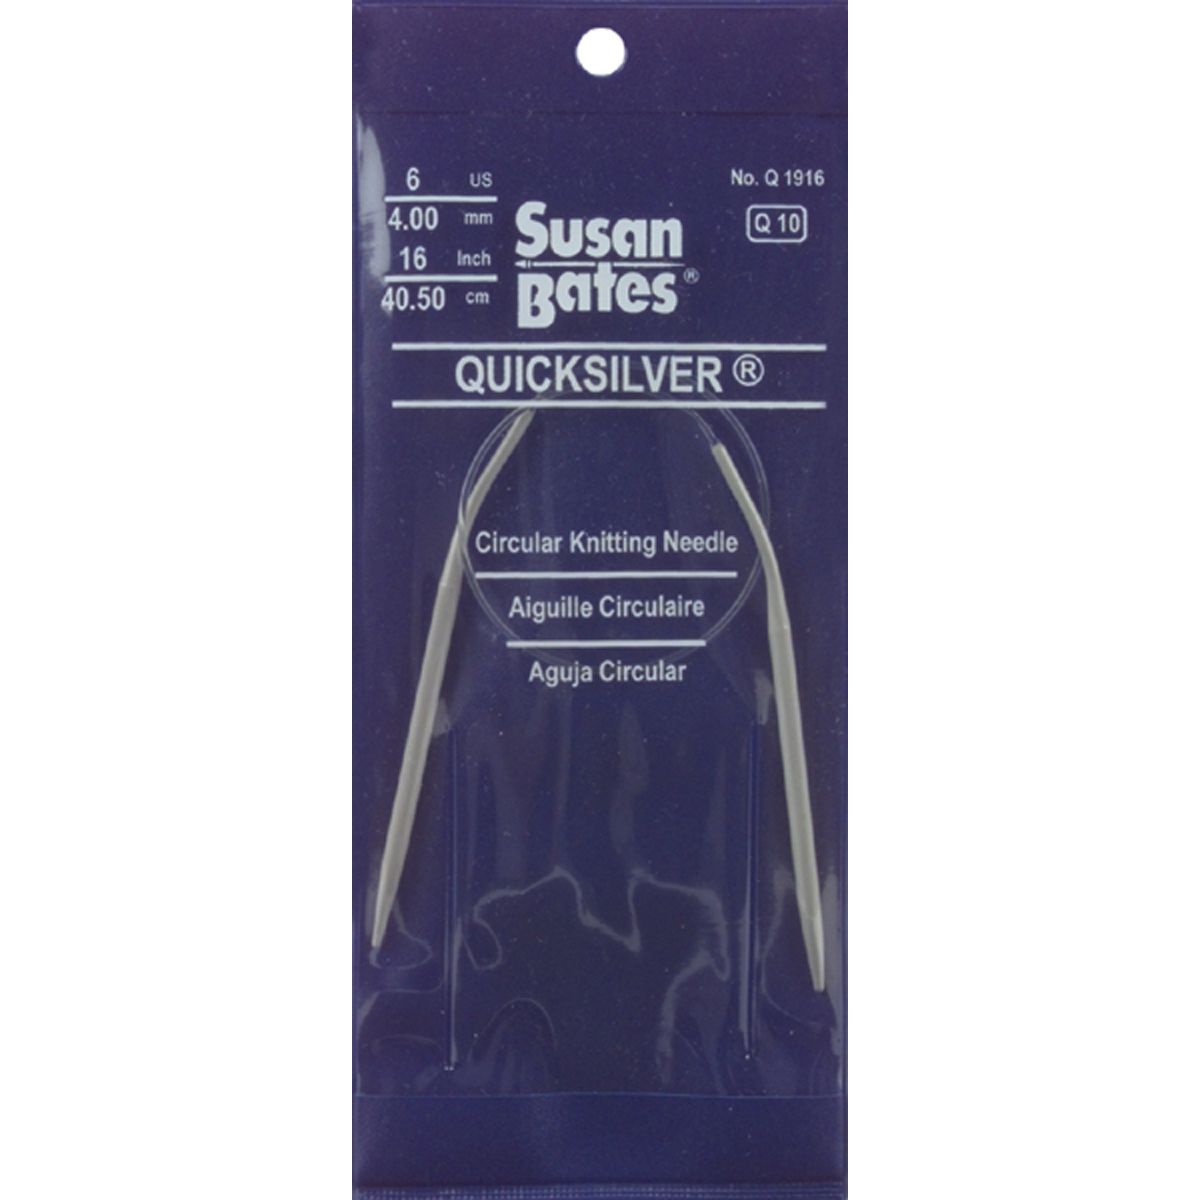 Susan Bates Quicksilver Circular Knitting Needle 24" Size 6